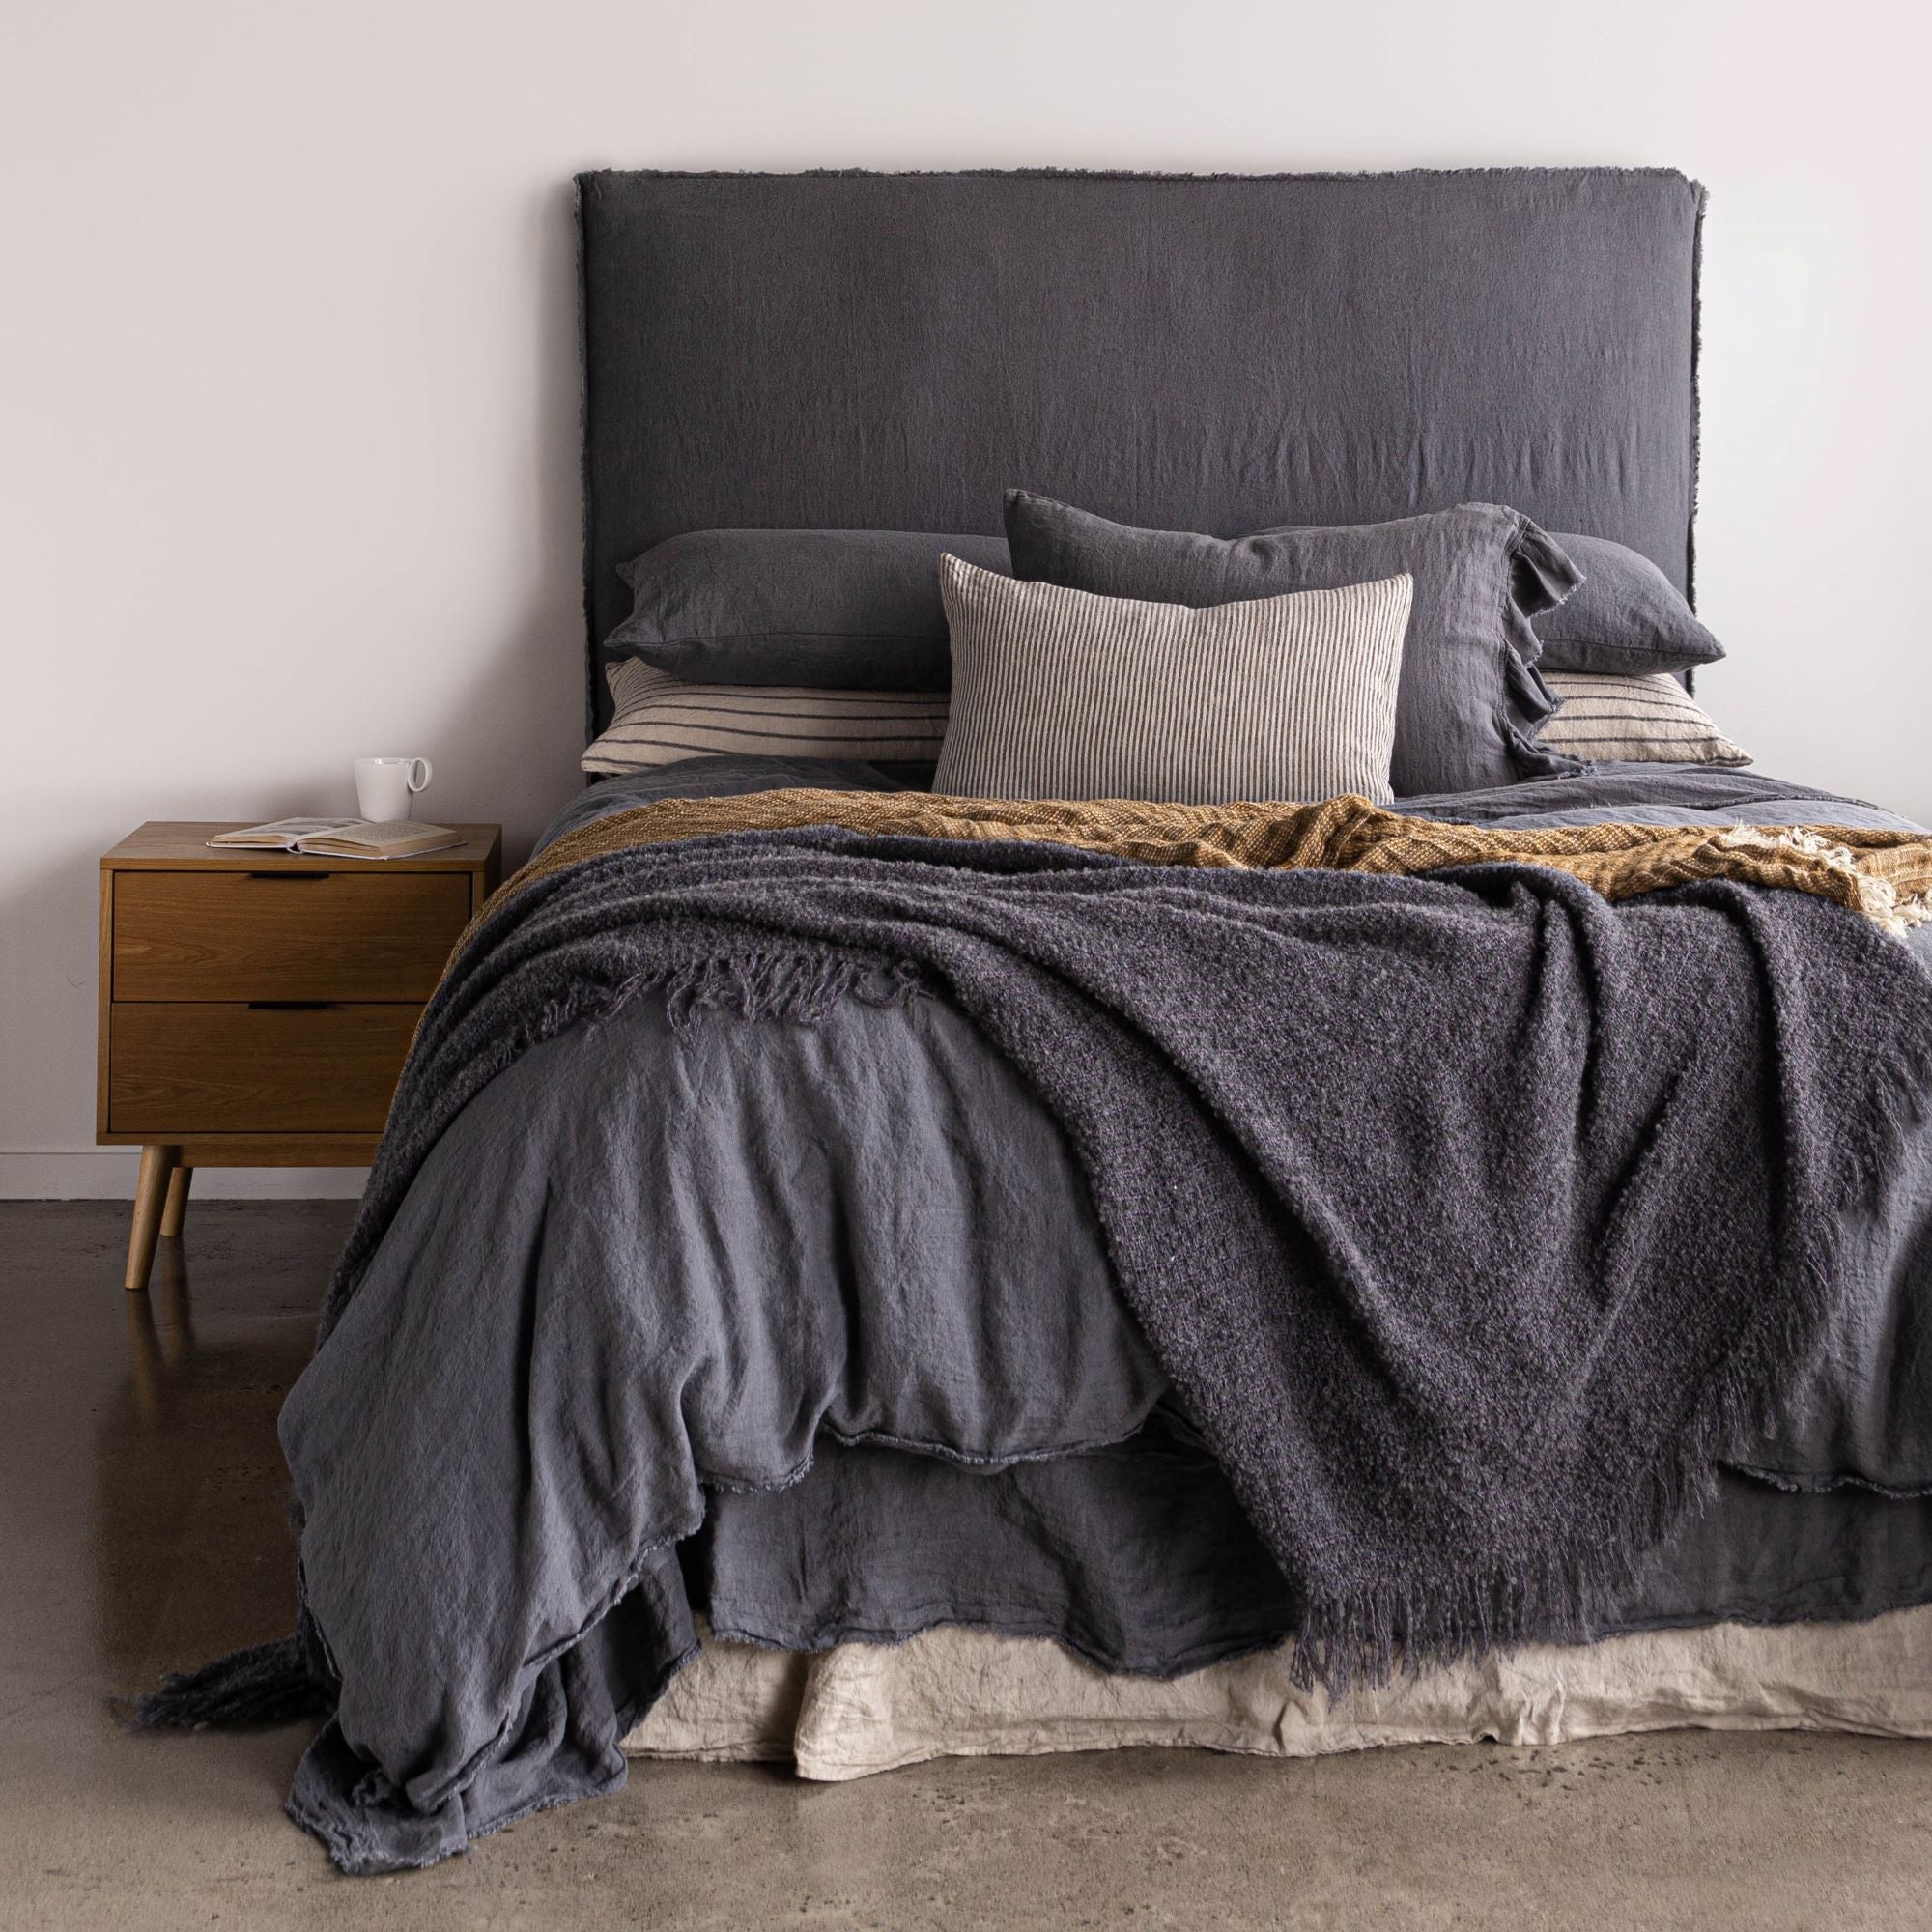 Linen Bedhead & Cover | Charcoal Grey | Hale Mercantile Co.